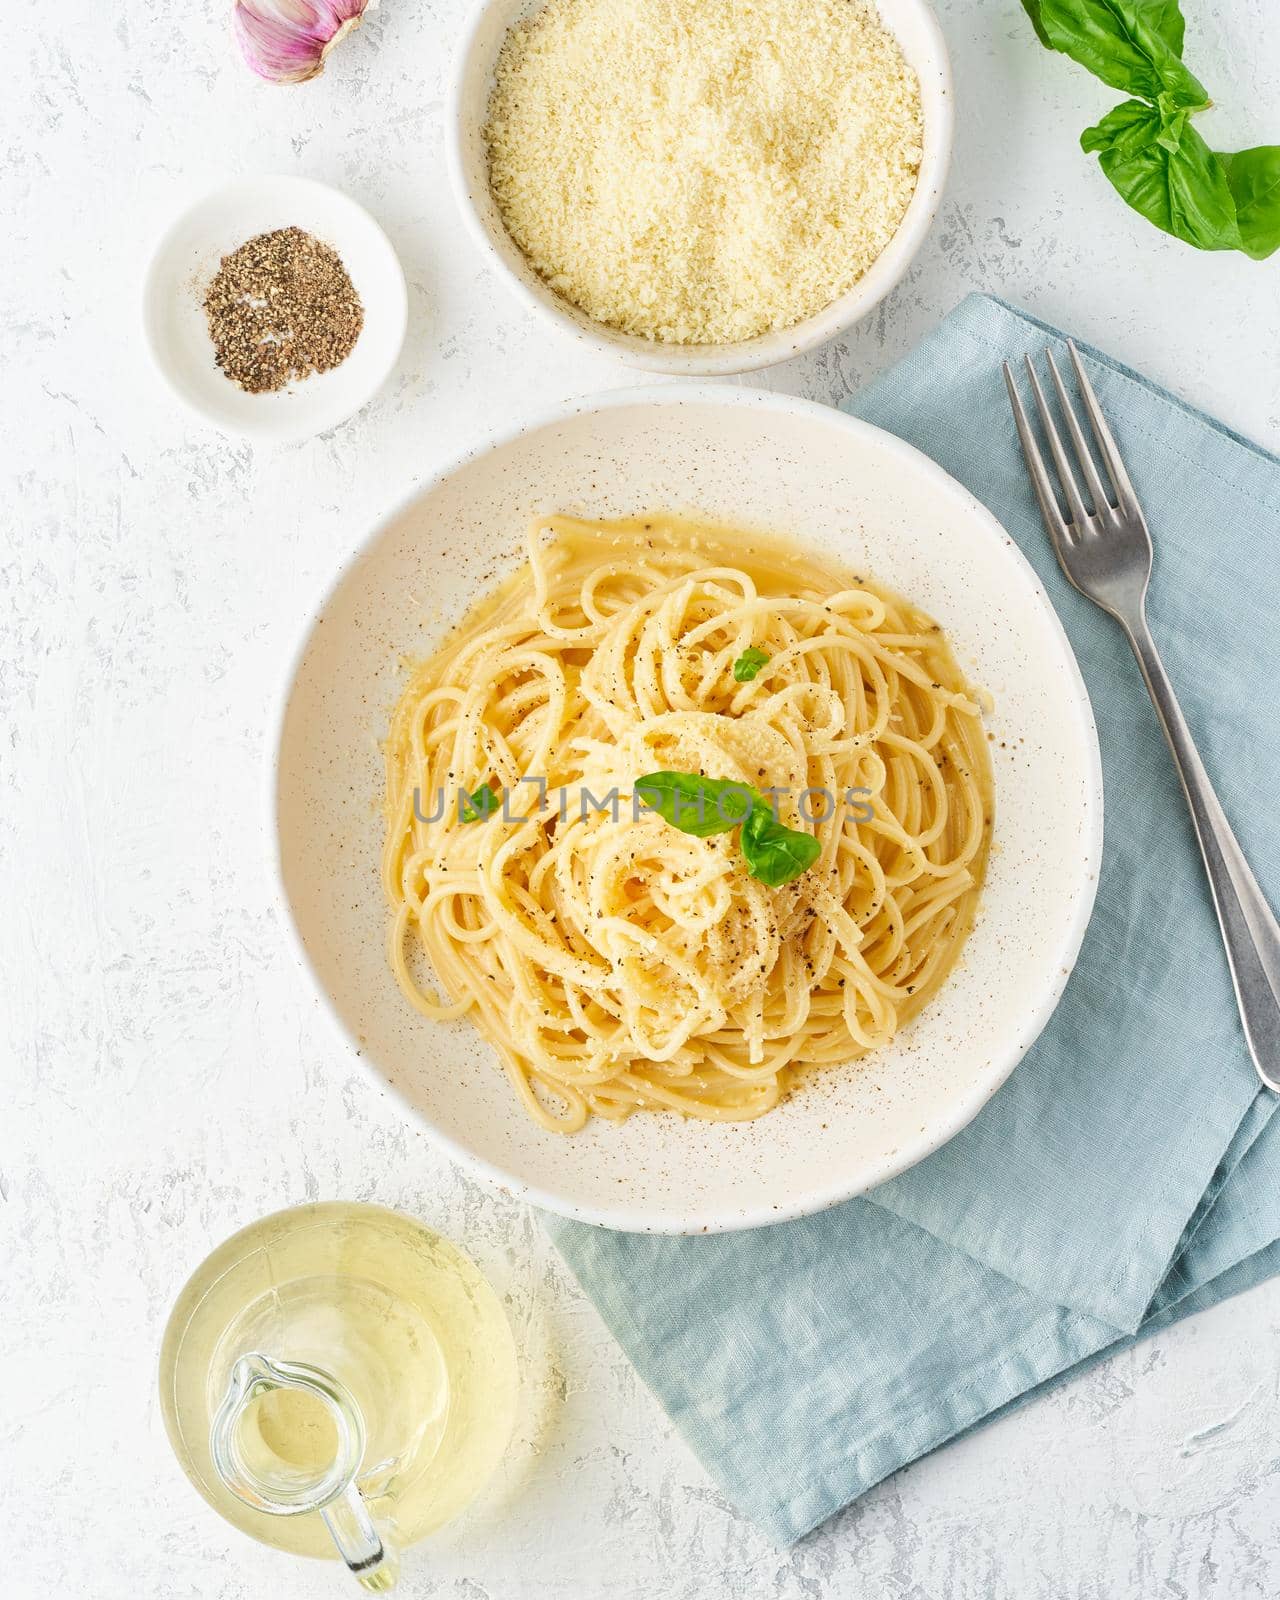 Cacio e pepe pasta. Spaghetti with parmesan cheese and pepper. by NataBene